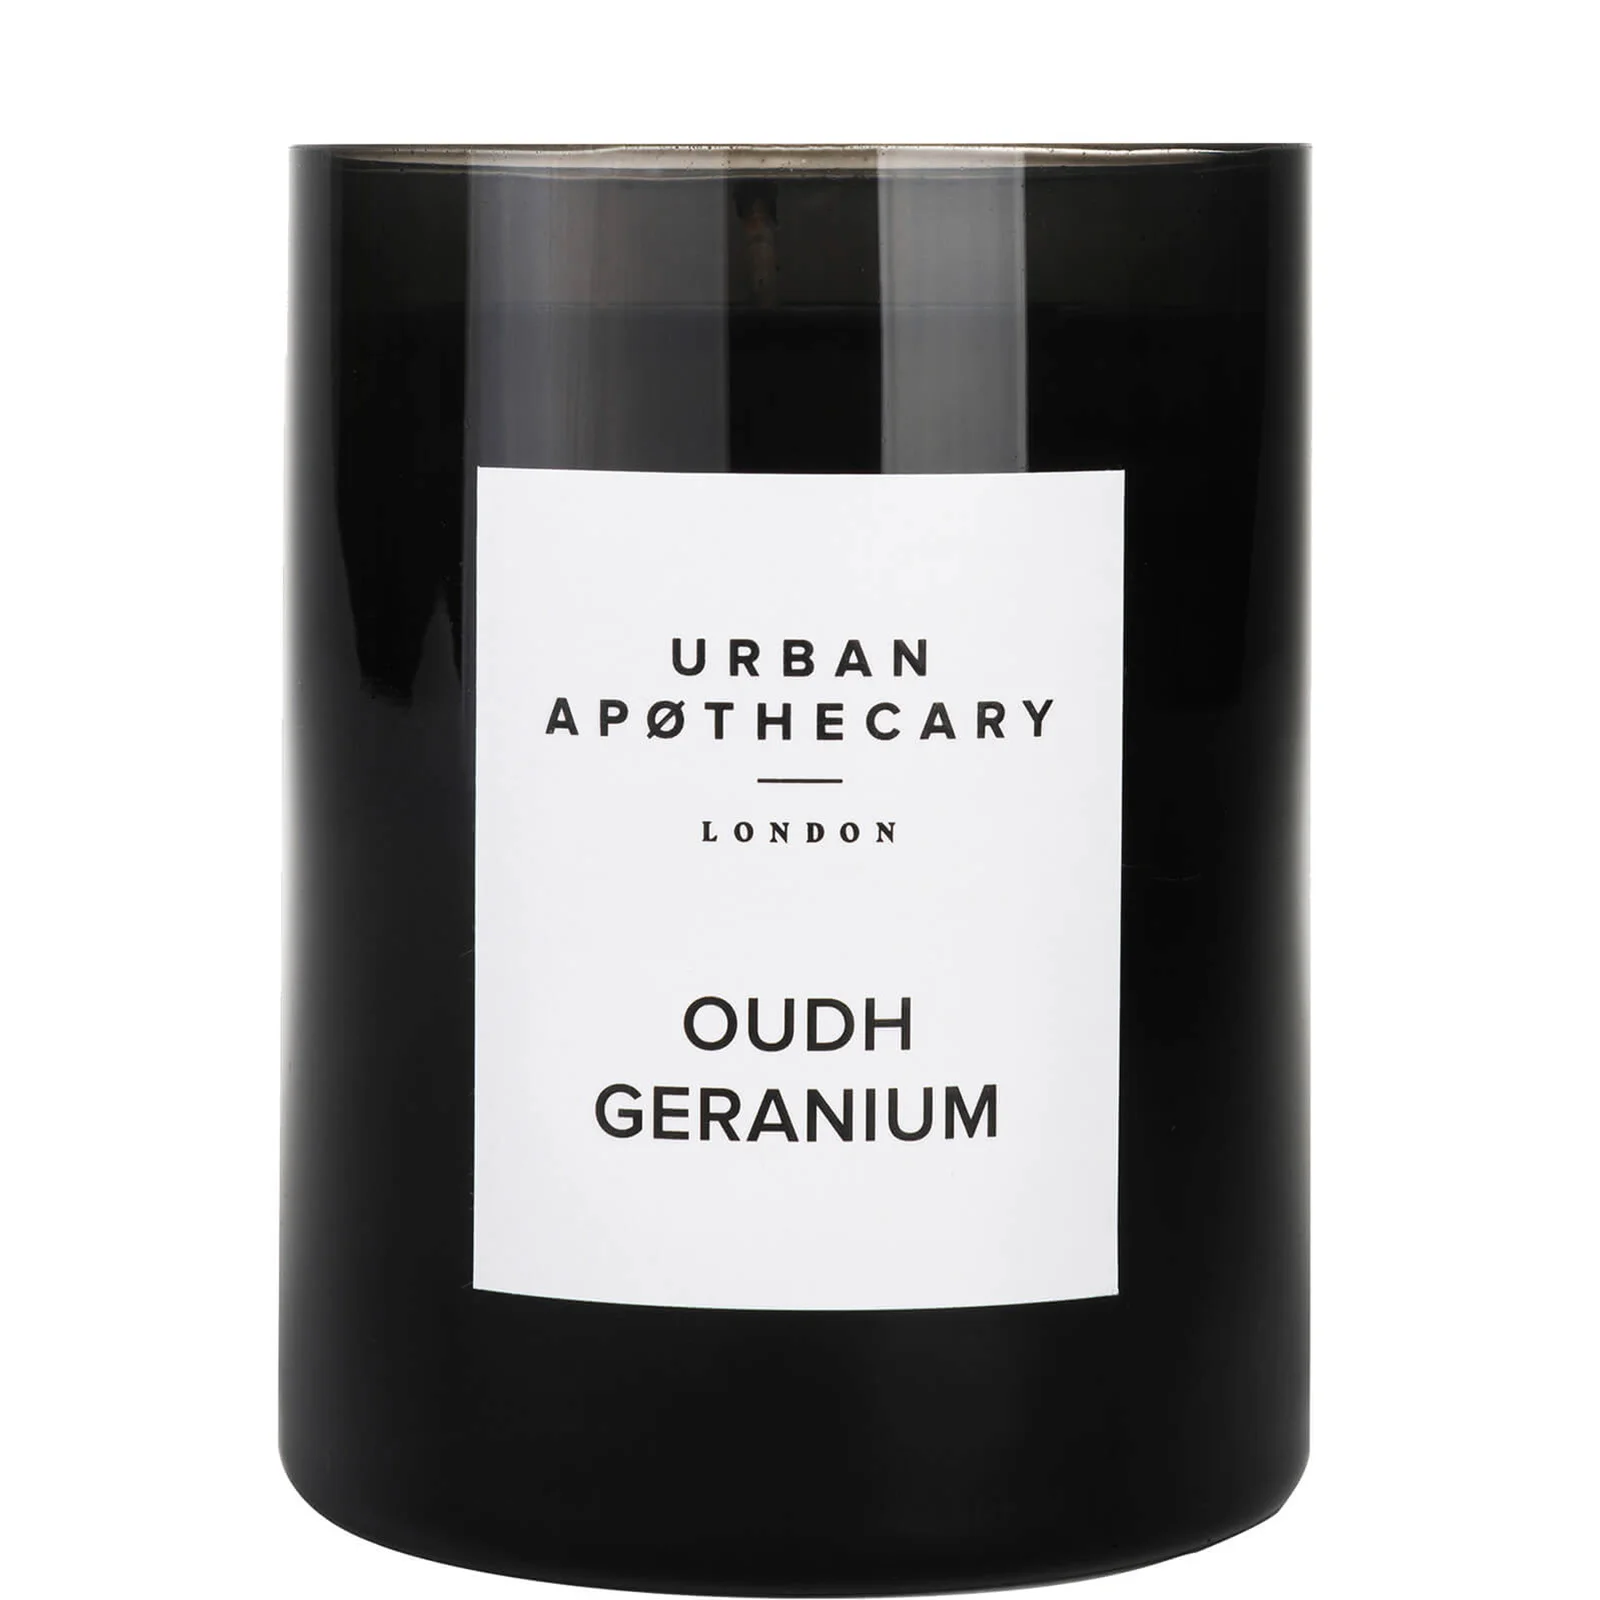 Urban Apothecary Oudh Geranium Luxury Candle 300g Image 1